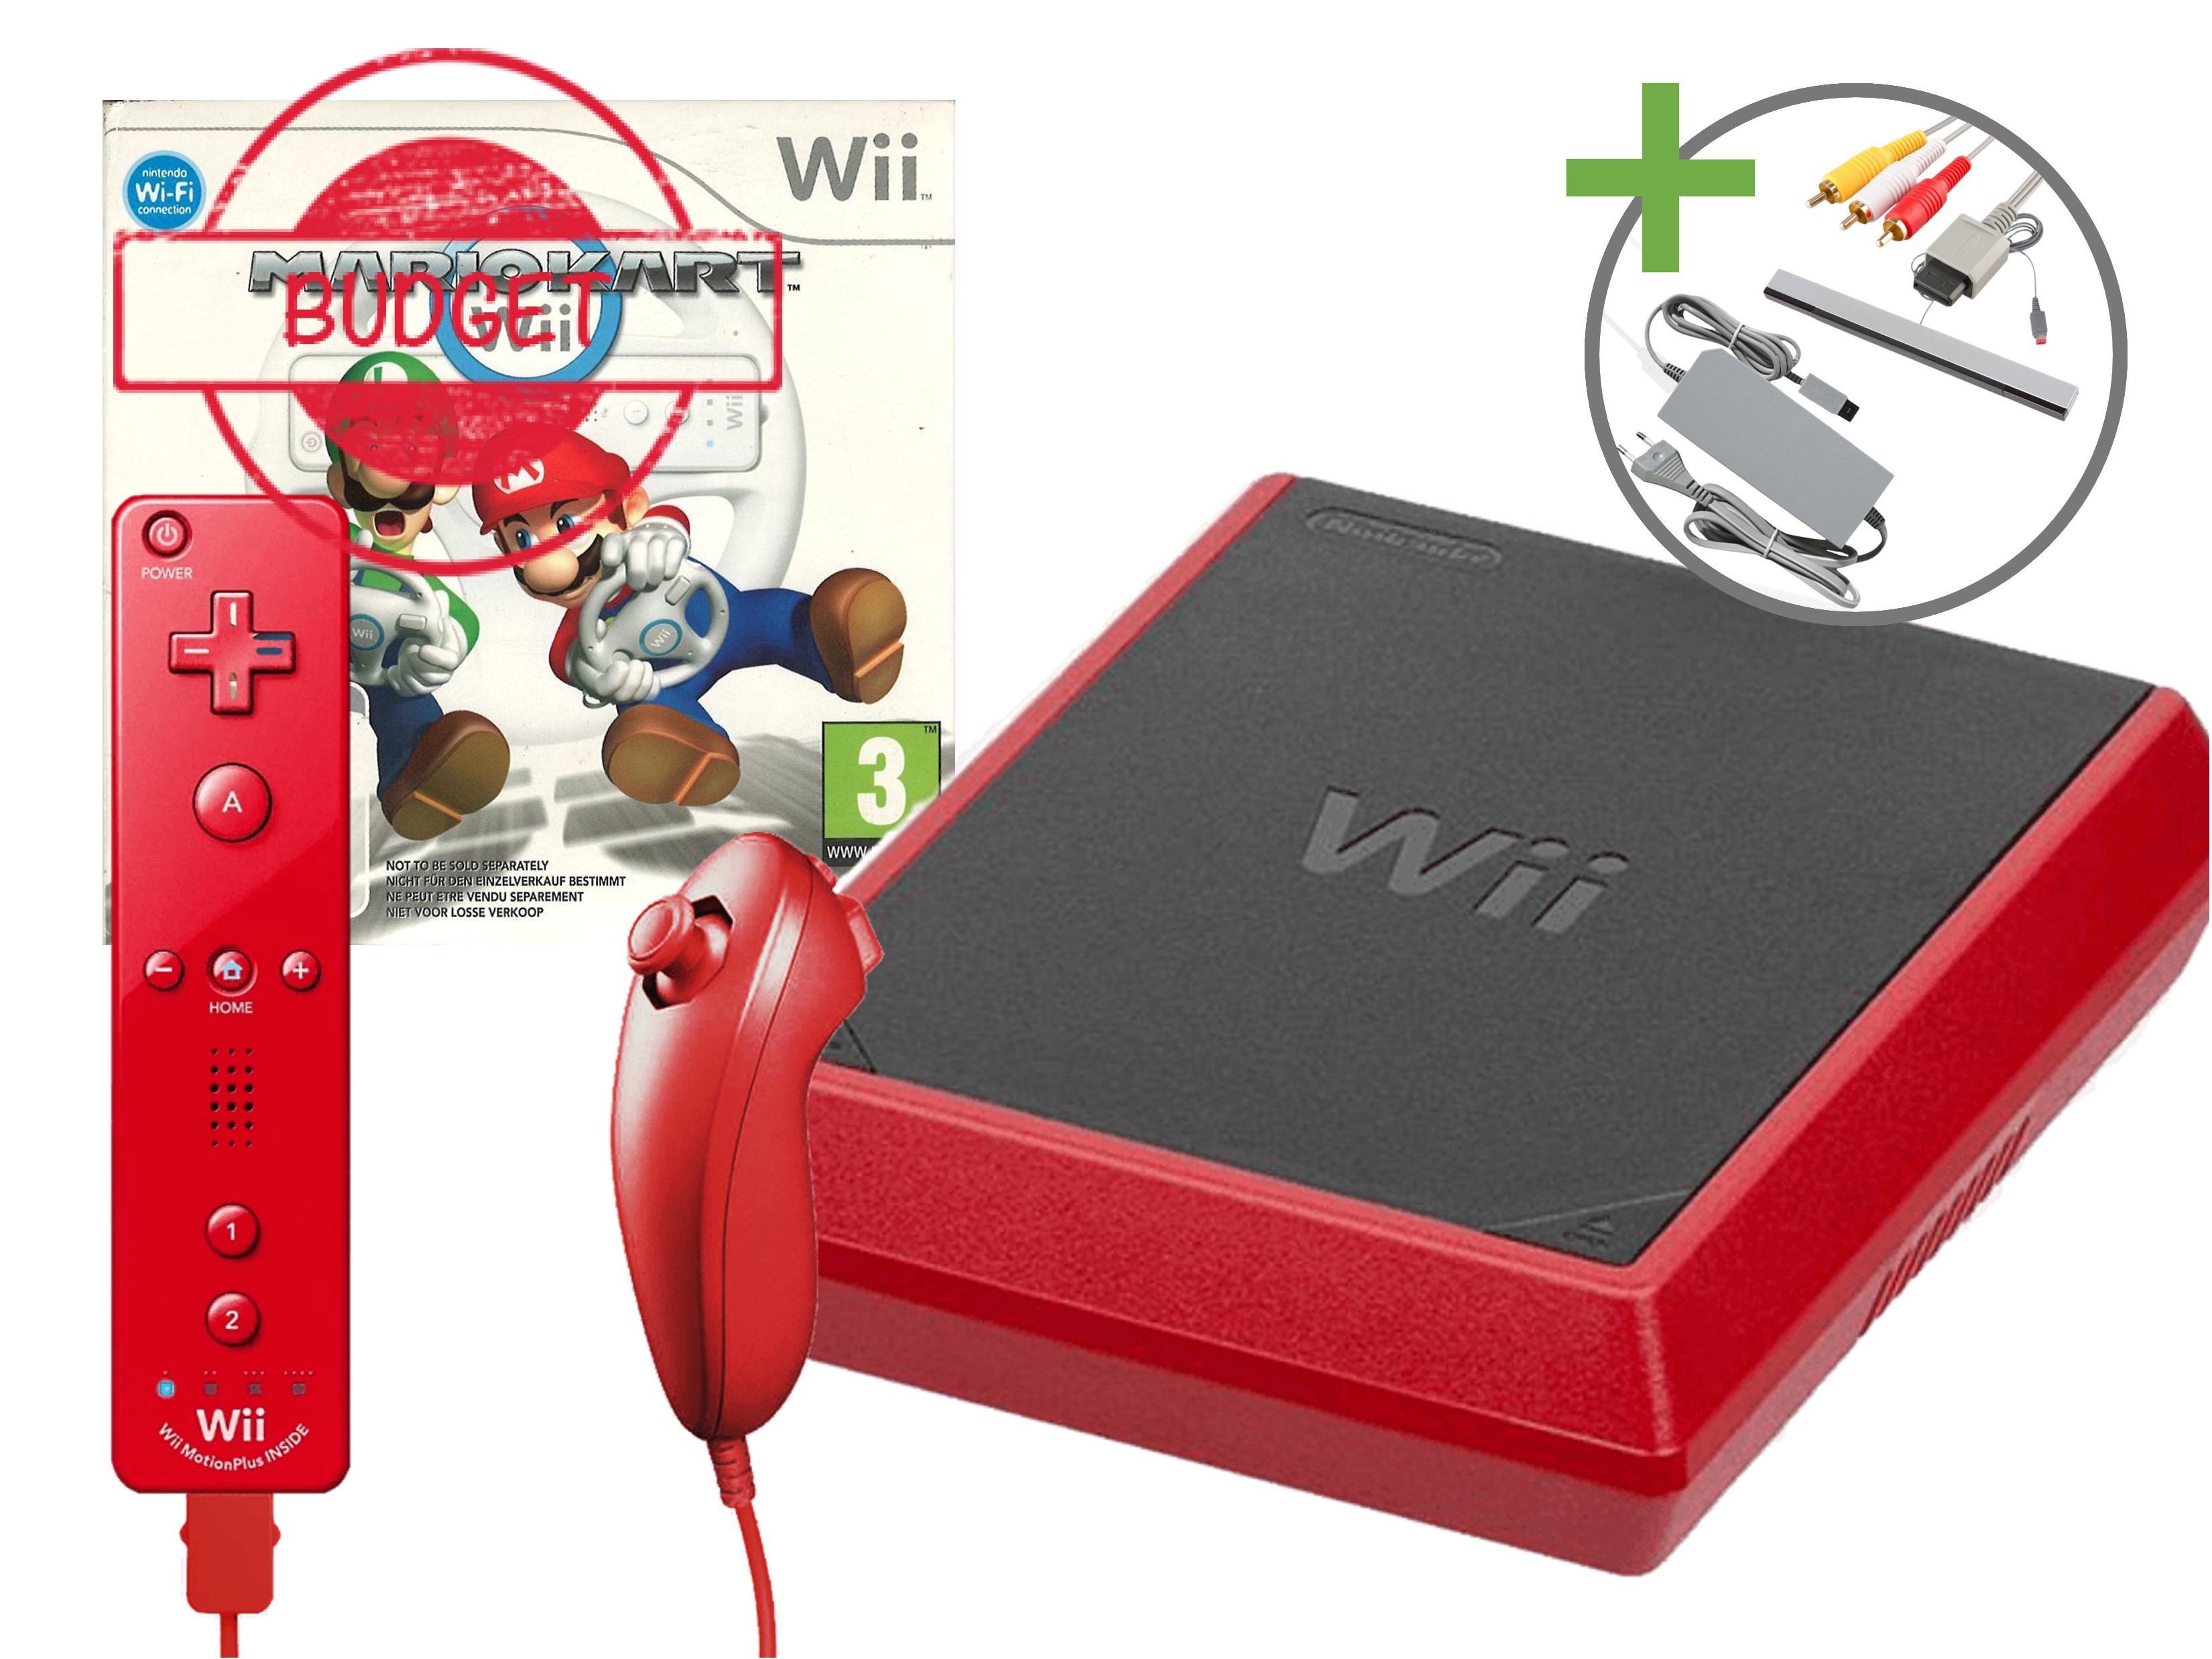 Nintendo Wii Mini Starter Pack - Mario Kart Wii Edition - Budget - Wii Hardware